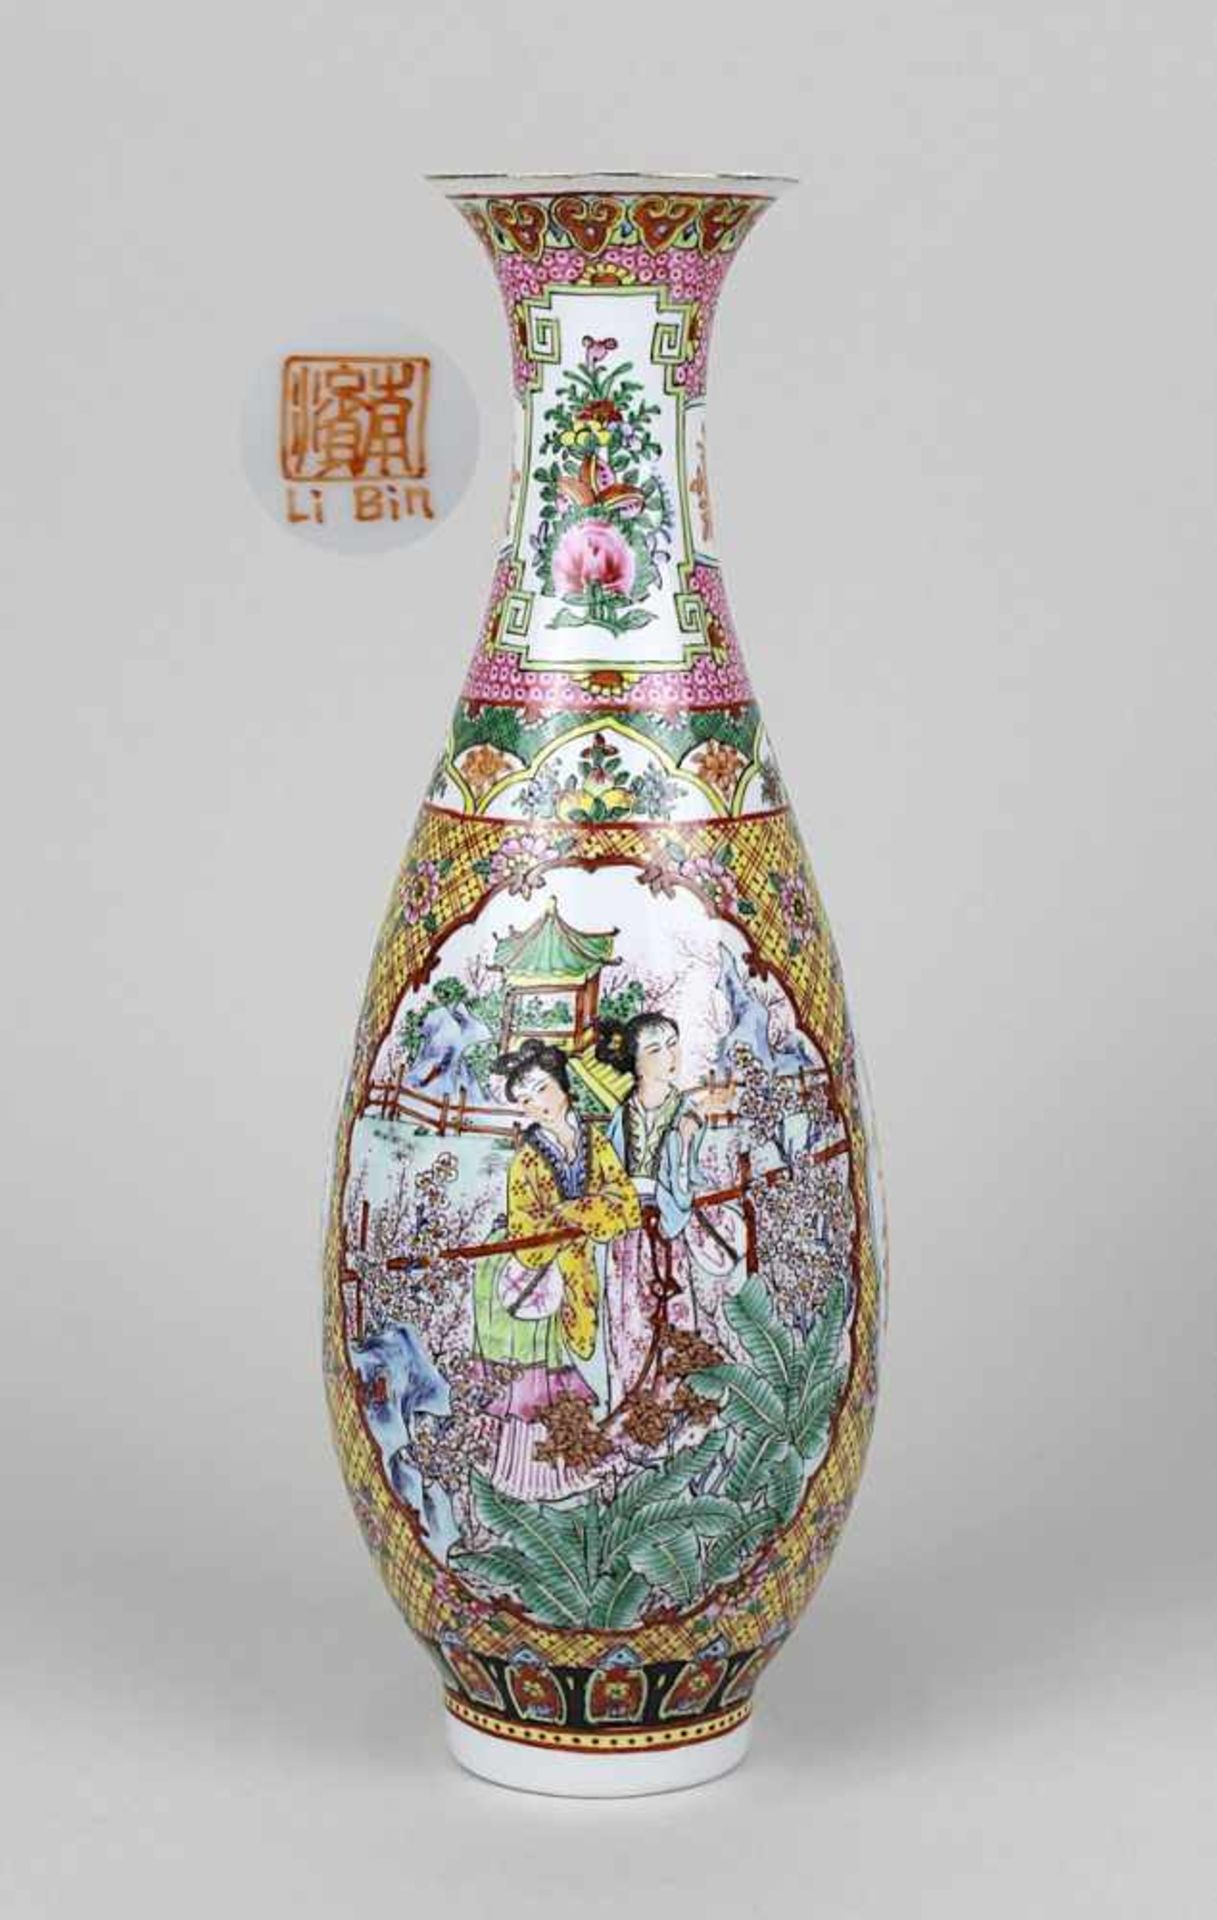 Vase aus Eierschalenporzellan, China um 1930, Keulenform, famille verte, feine polychrome